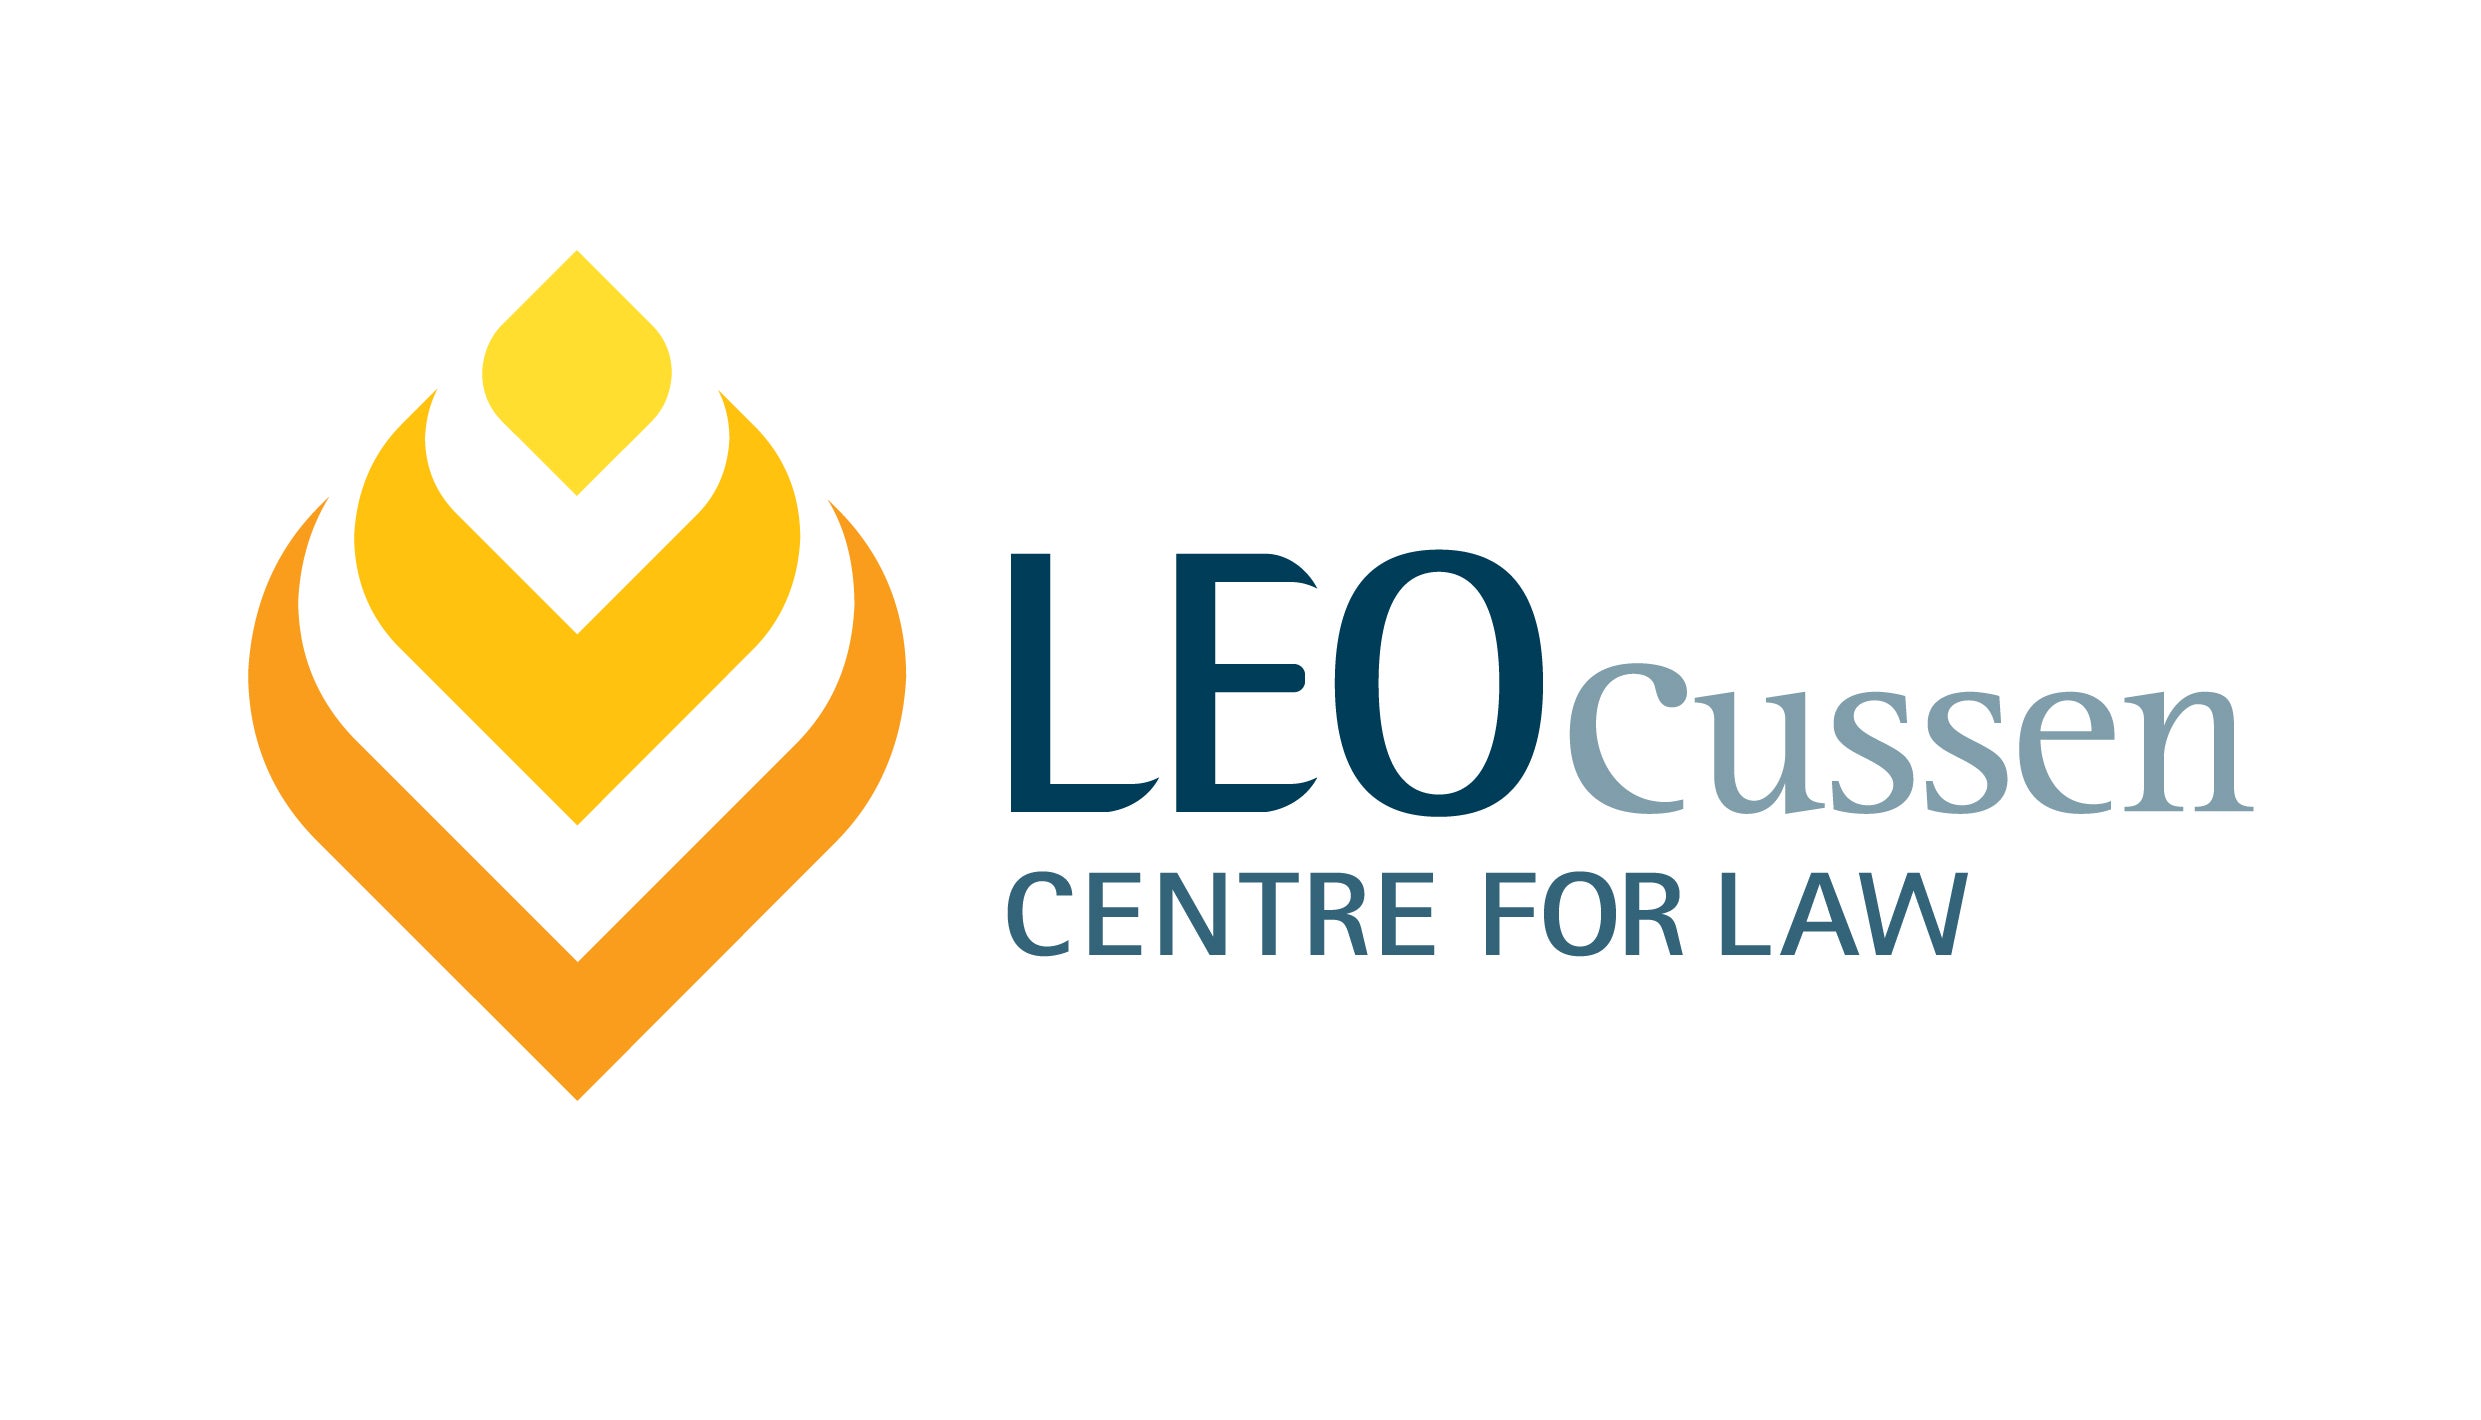 Leo Cussen Centre for law logo